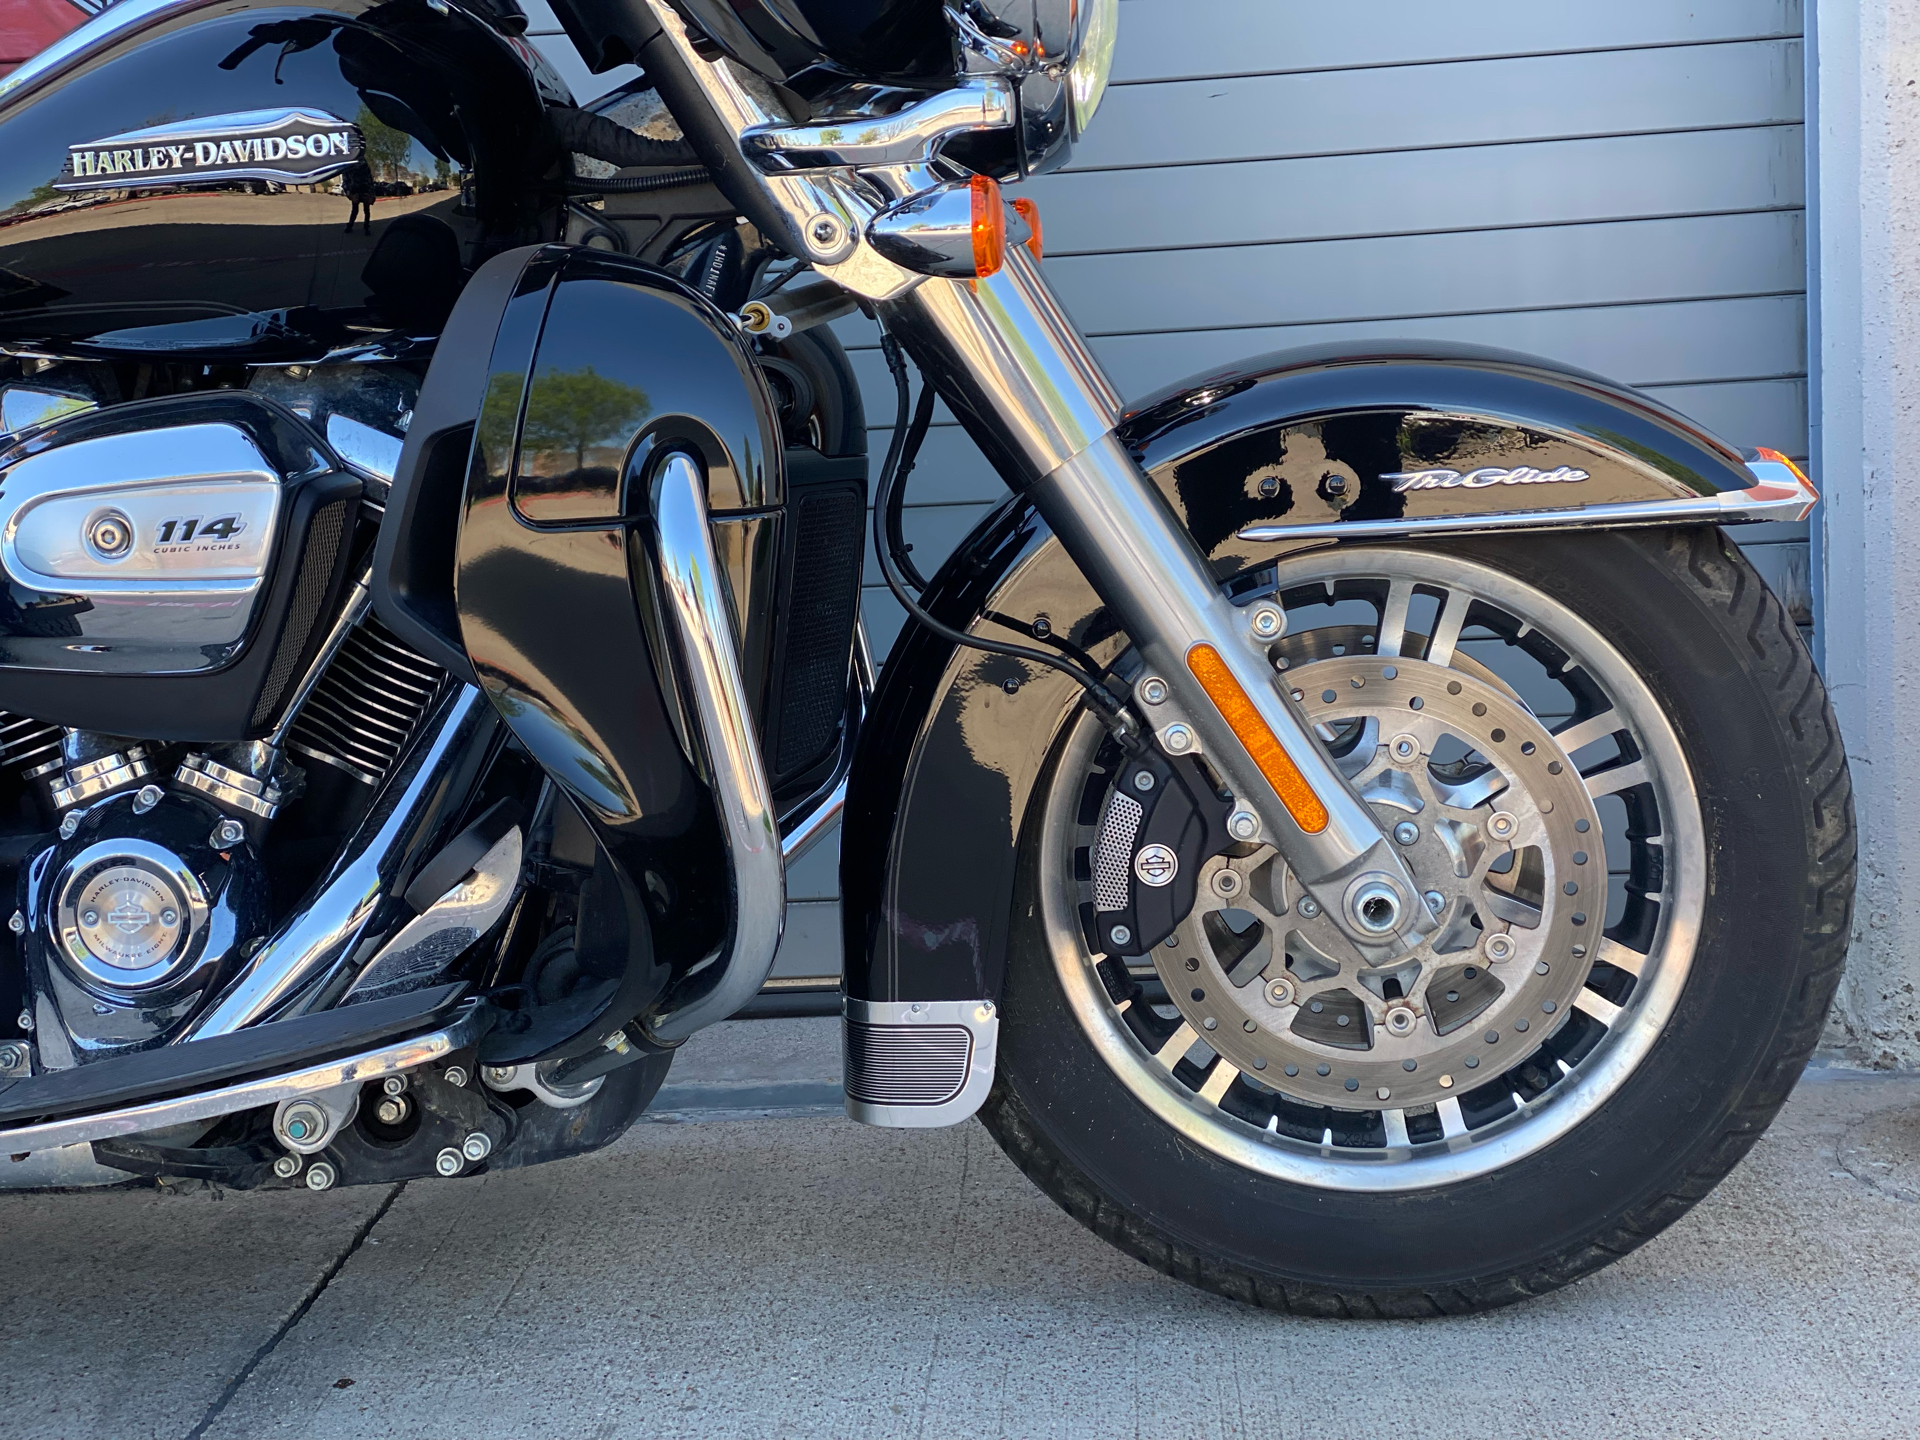 2019 Harley-Davidson Tri Glide® Ultra in Grand Prairie, Texas - Photo 4